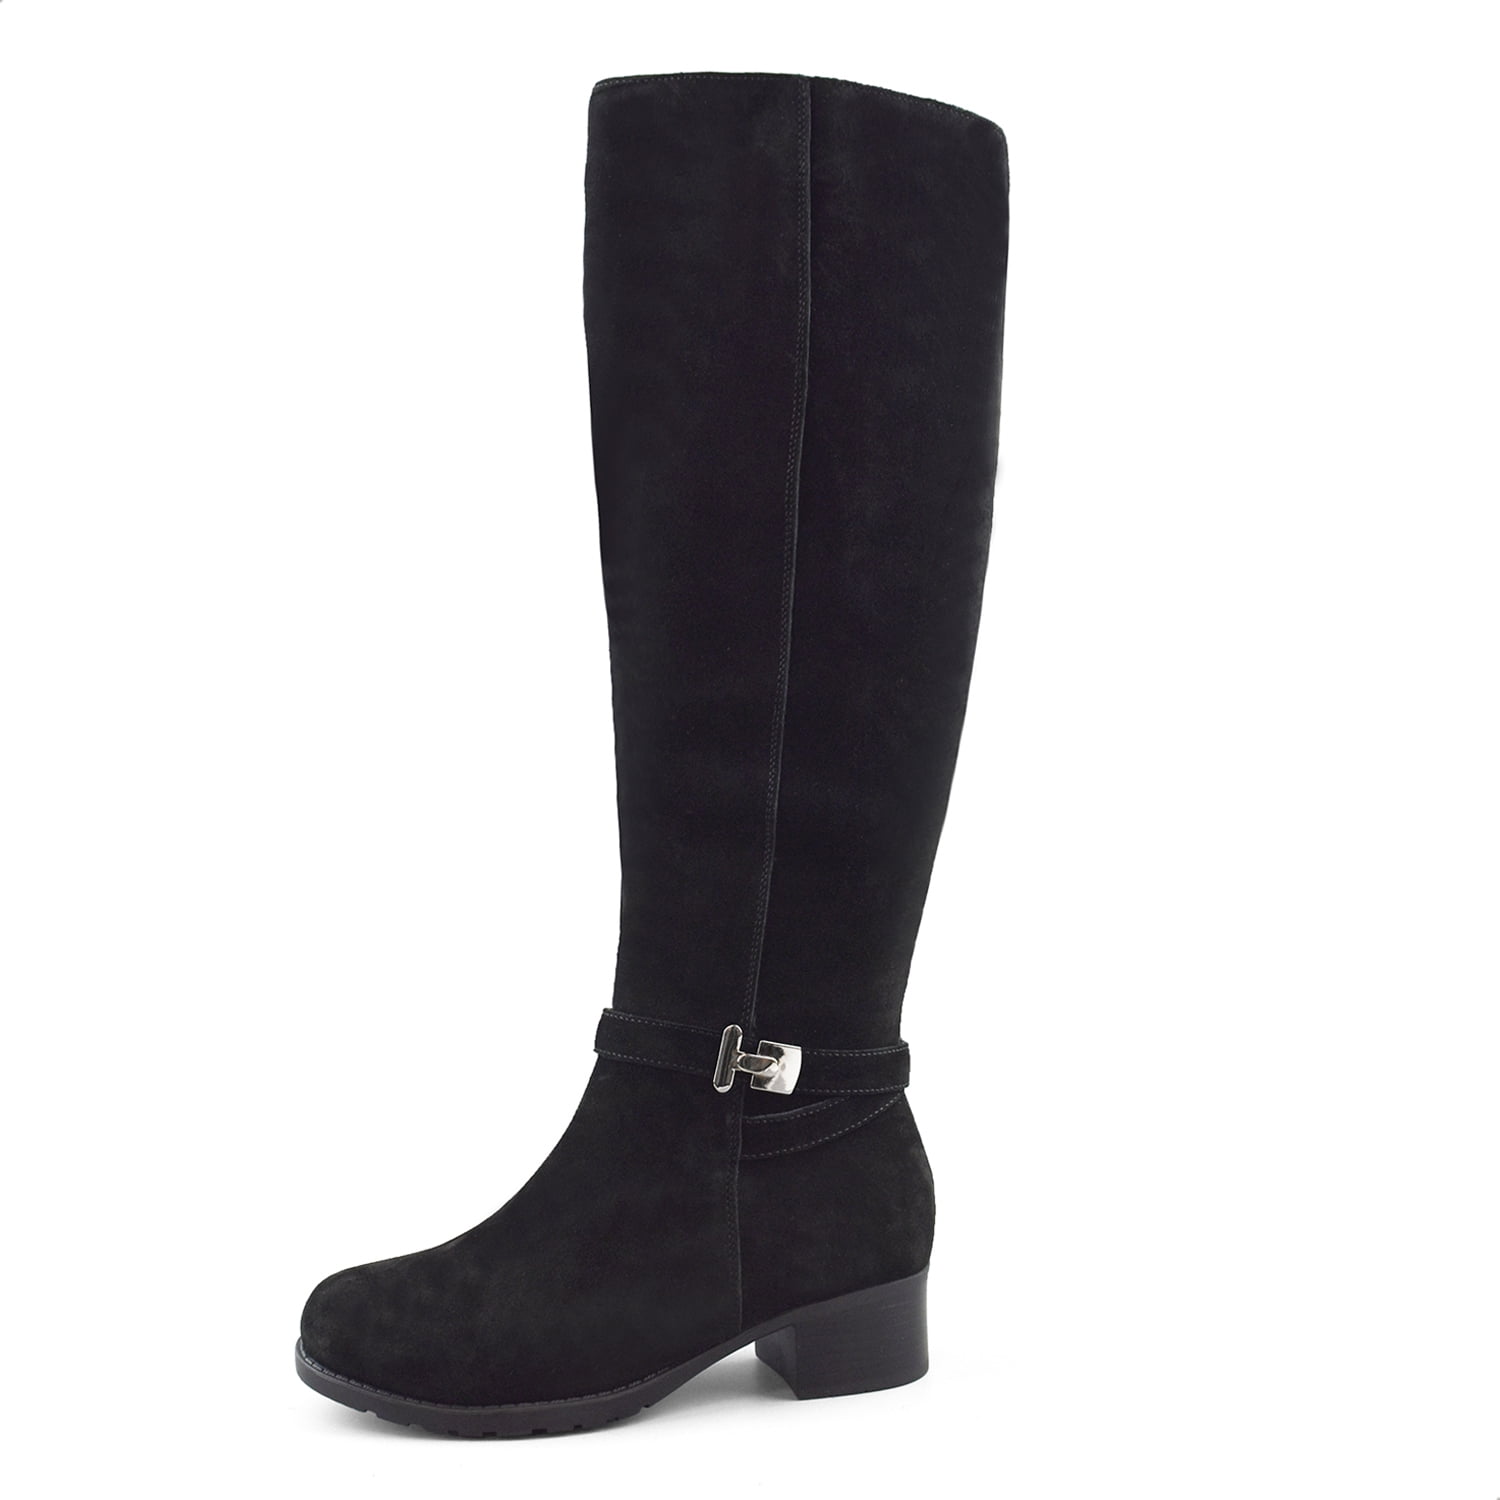 Comfy Moda Women's Fur Lined Leather Winter Boots Paris